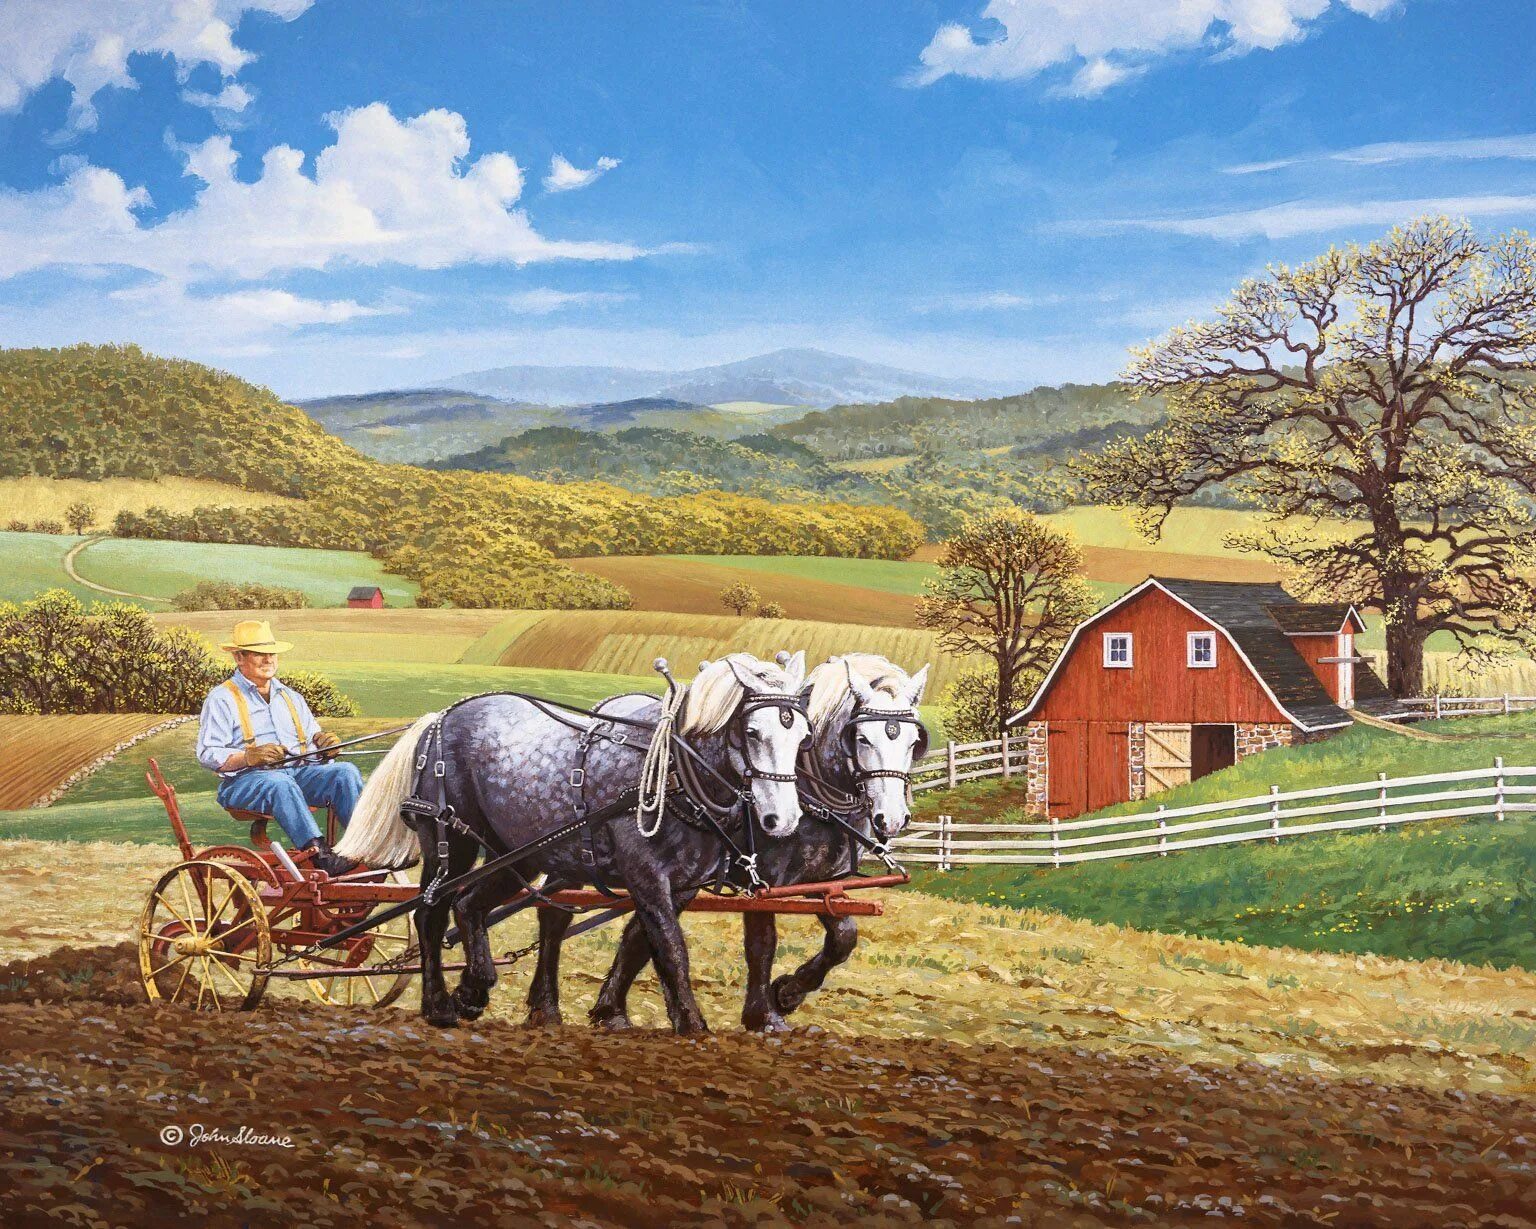 He lives on the farm. Ферма пейзаж. Ферма картина. Поле с фермой картина. Американская ферма арт.